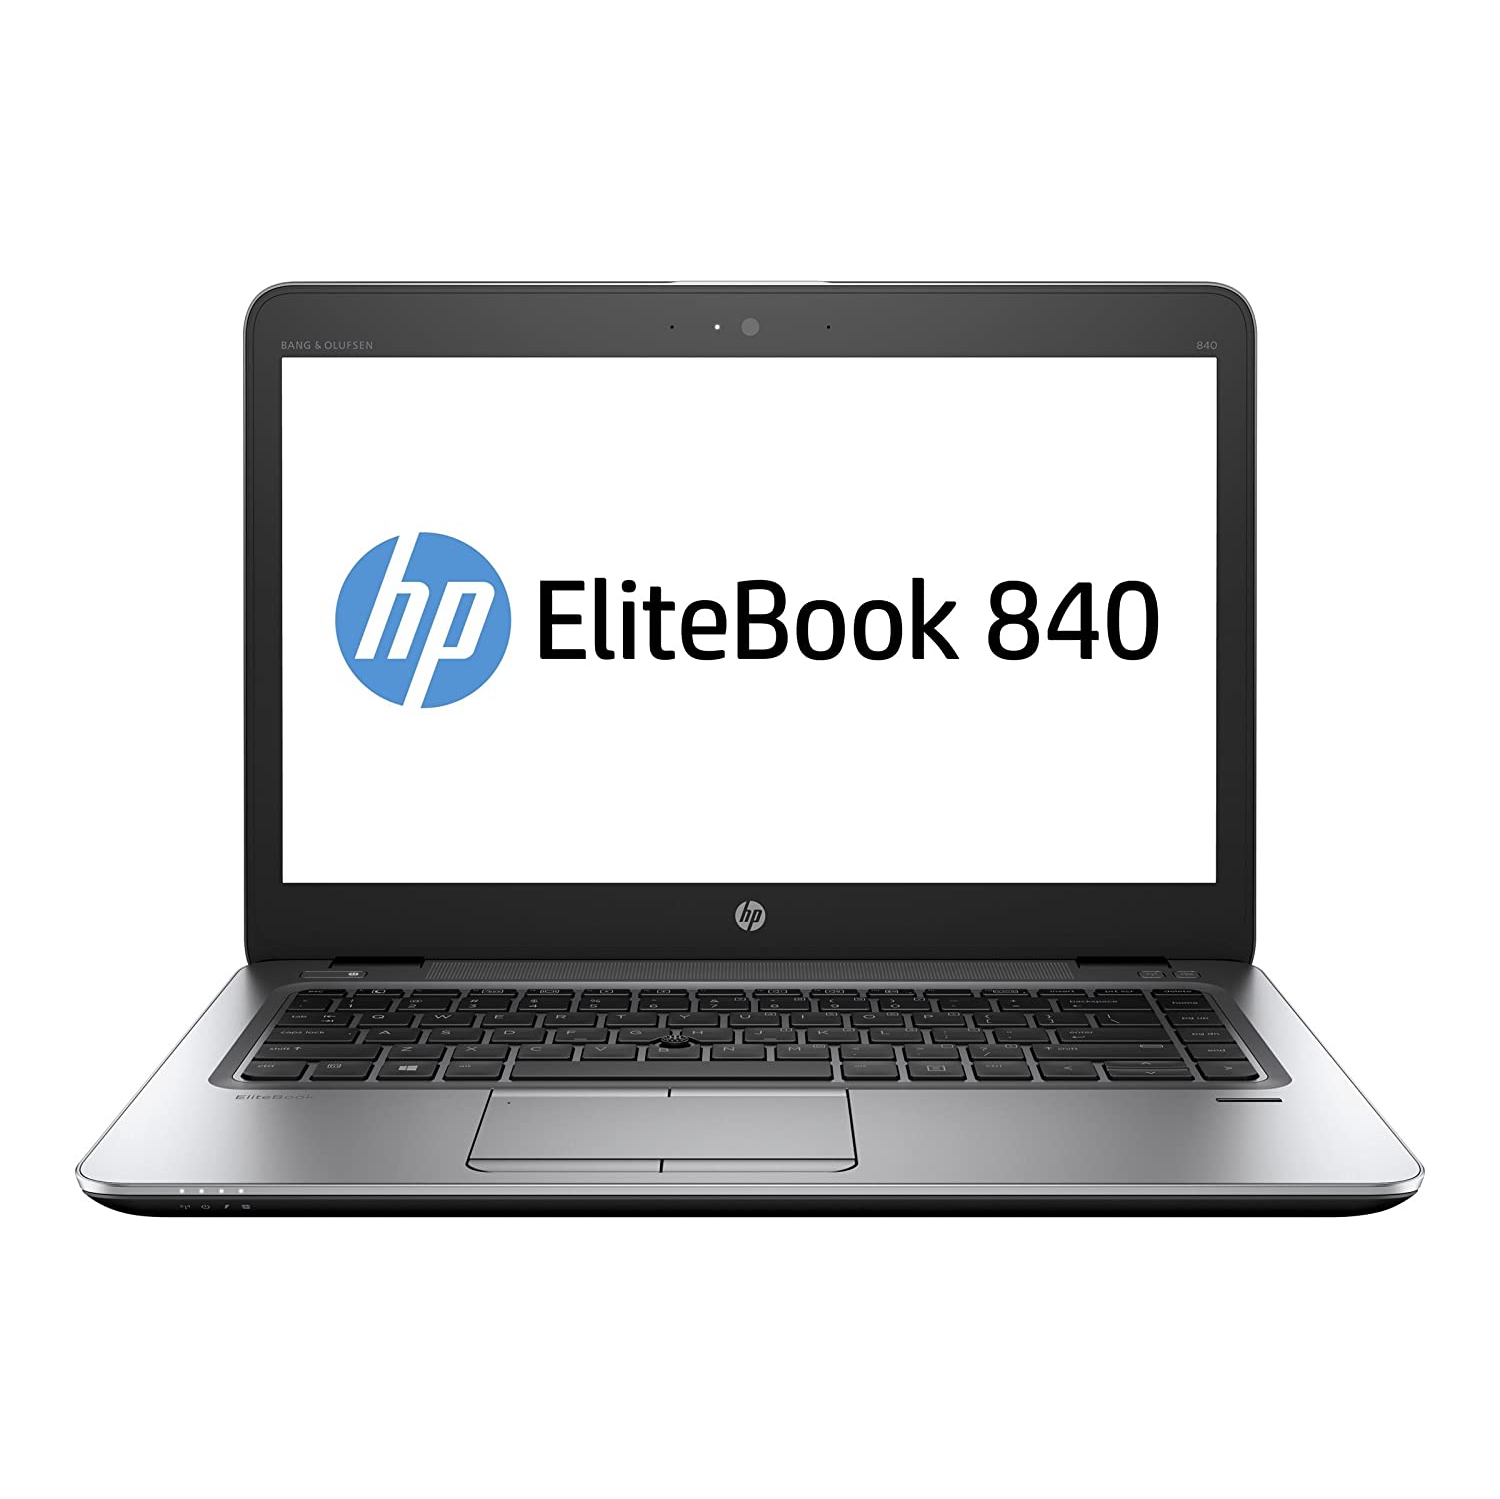 Refurbished (Good) - HP EliteBook 840 G3 Laptop Intel Core i5 2.4GHz 8GB Ram 180GB SSD Windows 10 Pro